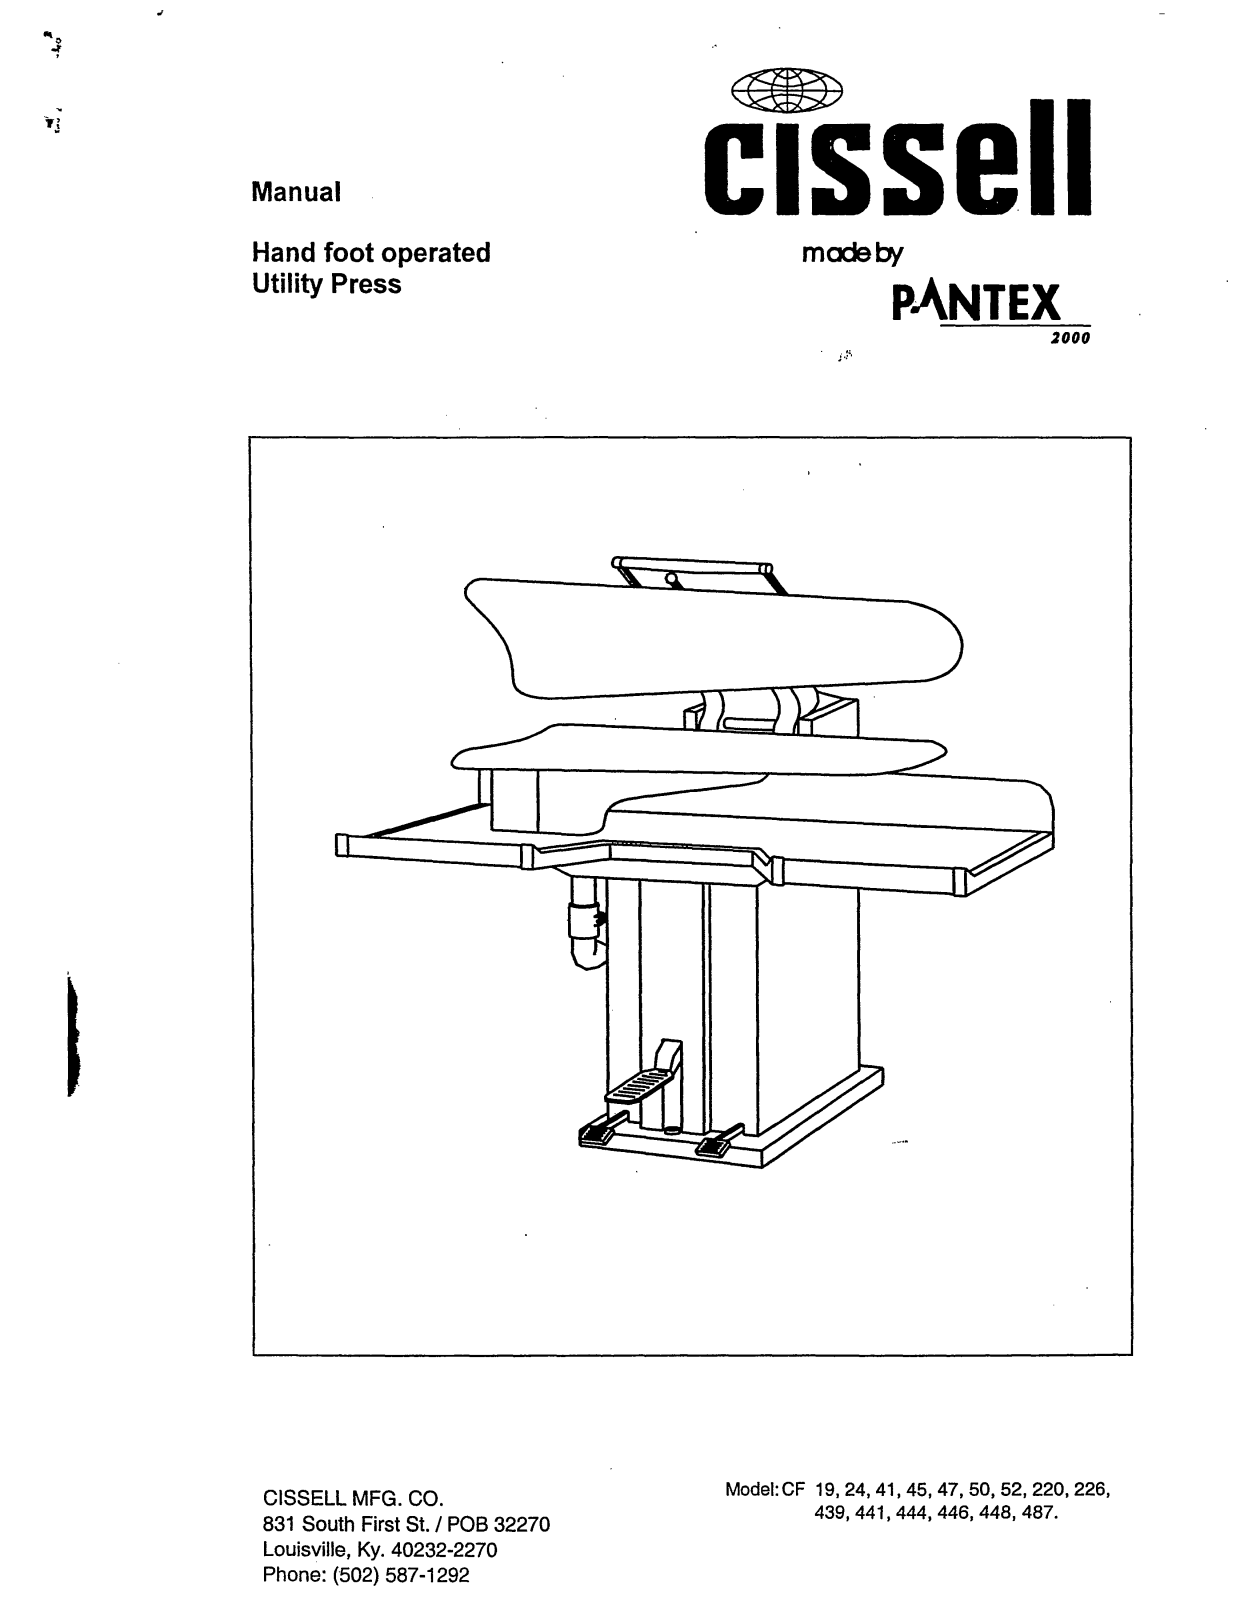 Cissell CF 50, CF 24, CF 487, CF 448, CF 47 Manual